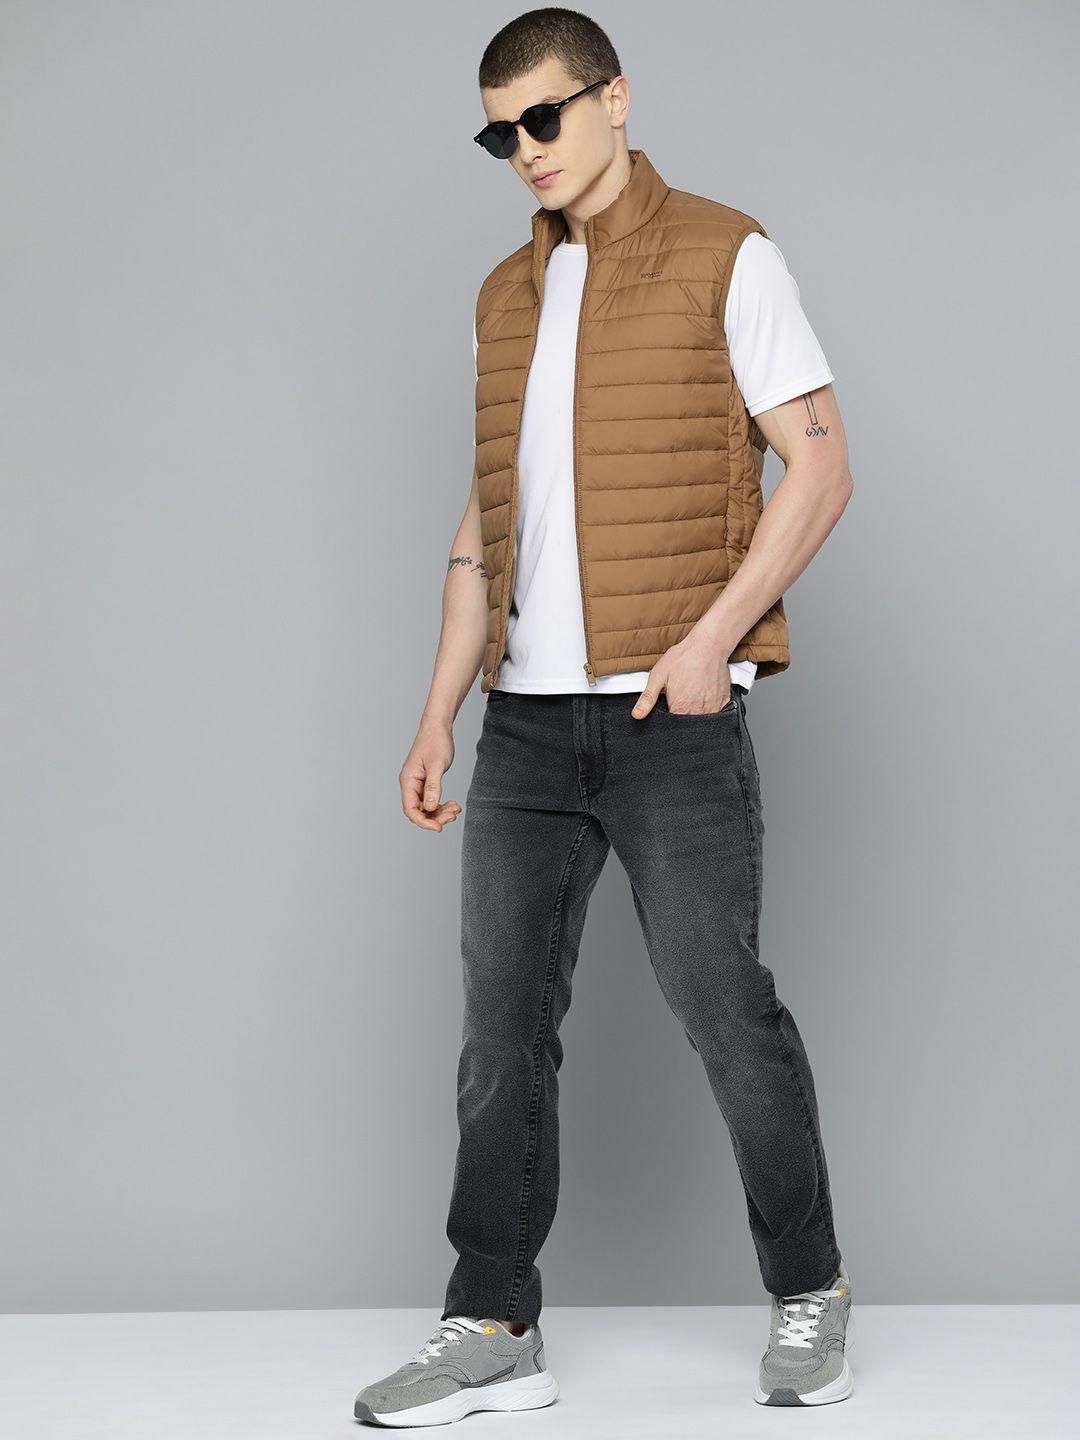 fort collins sleeveless padded jacket